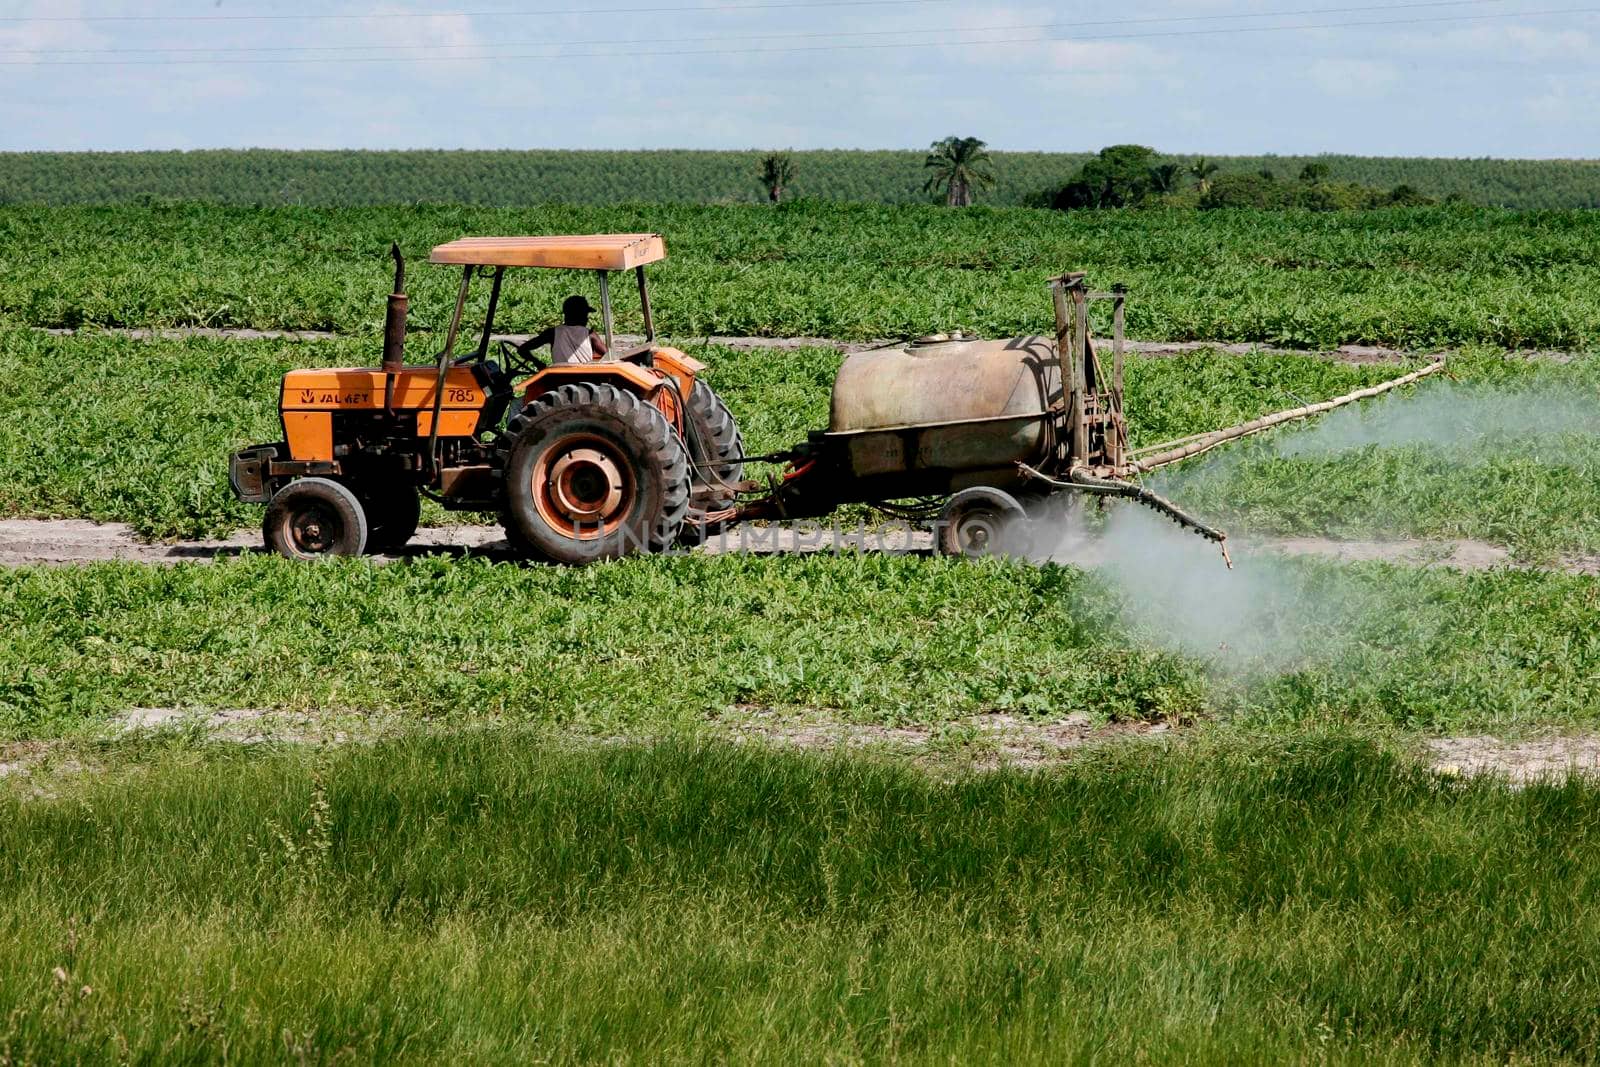 eunapolis, bahia / brazil - april 22, 2010: Tractor is seen during pesticide spraying on watermelon plantation in Eunapolis City.